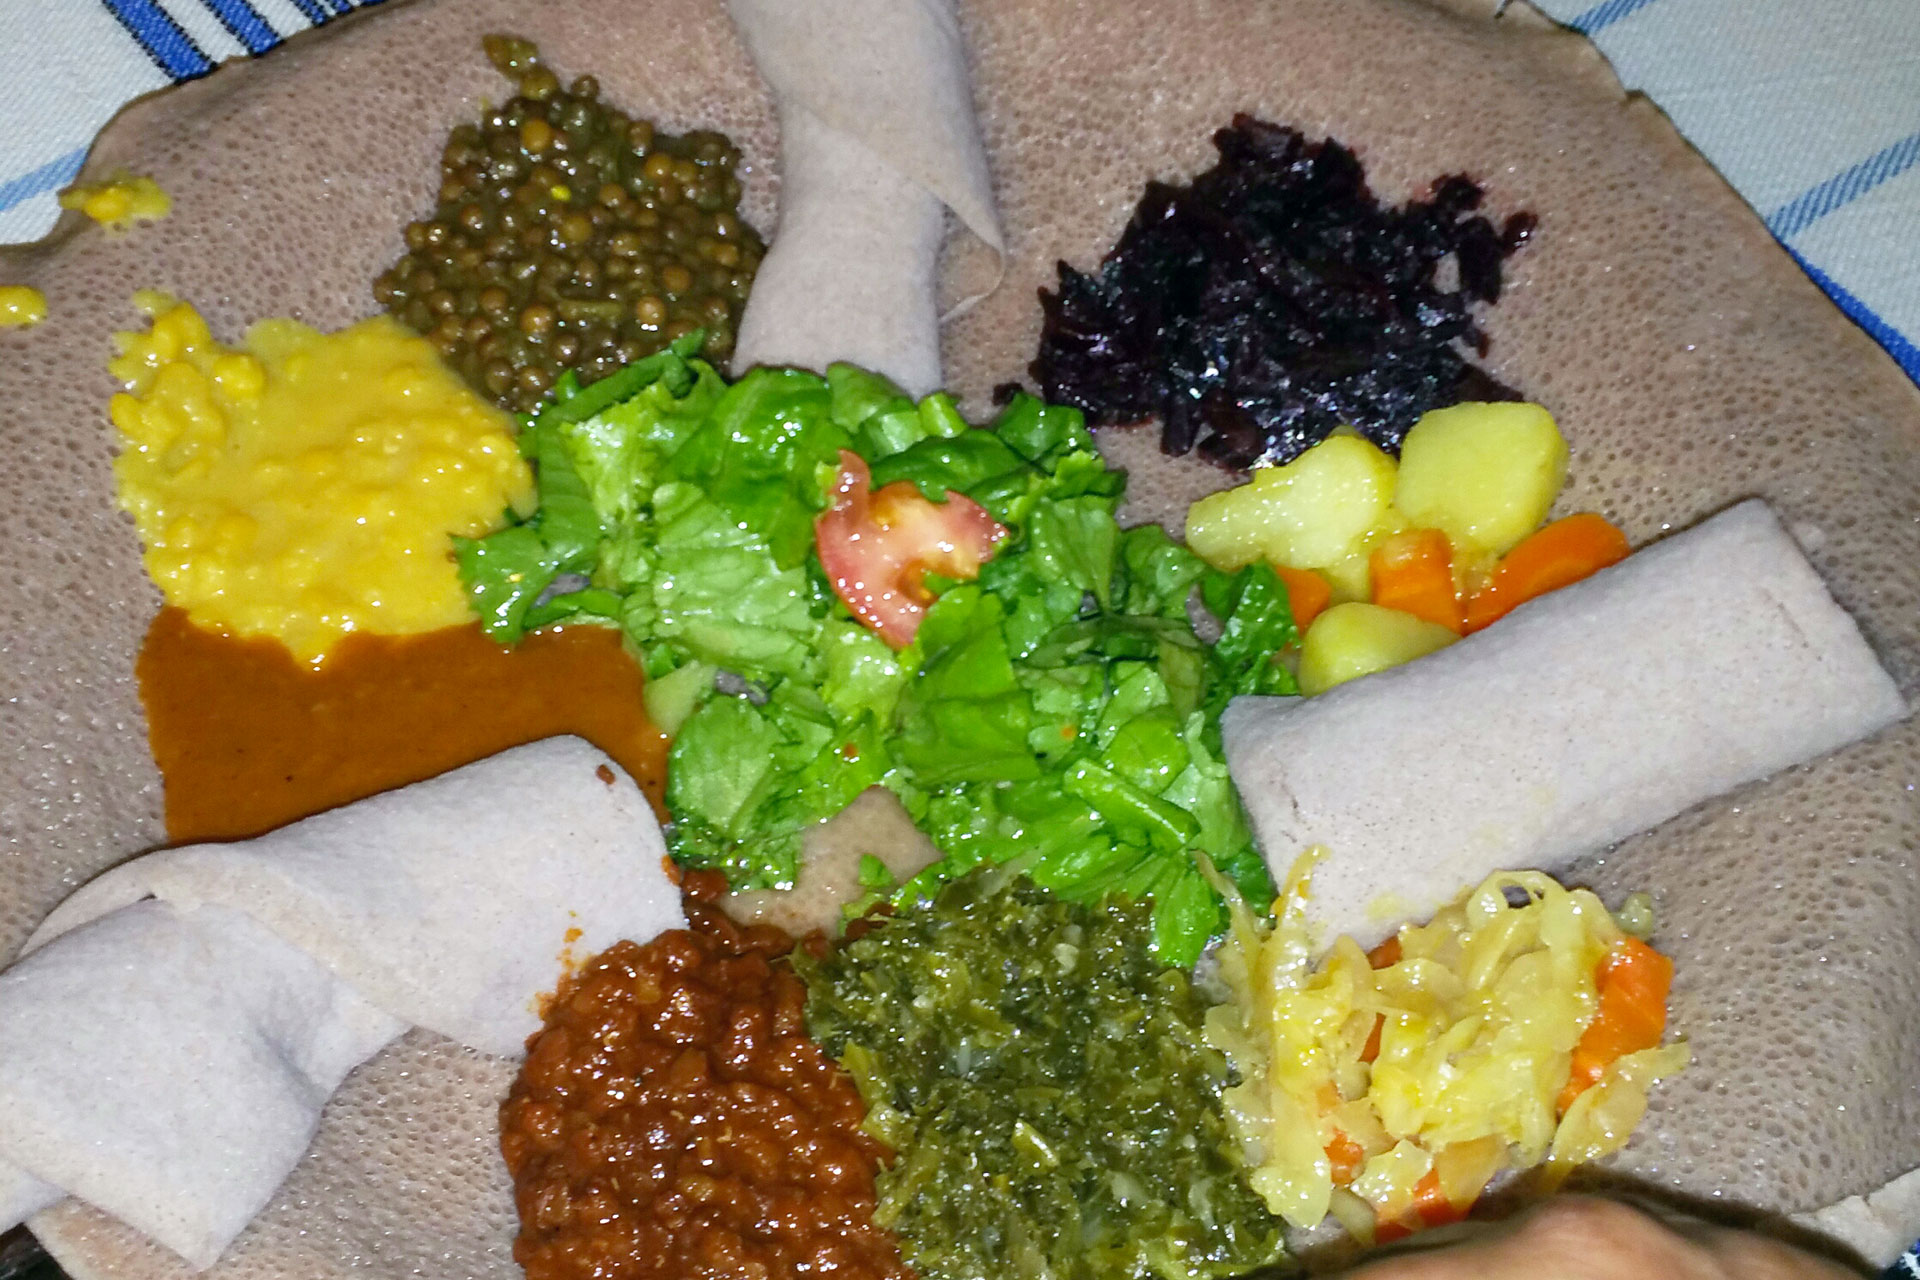 ethiopian food toronto